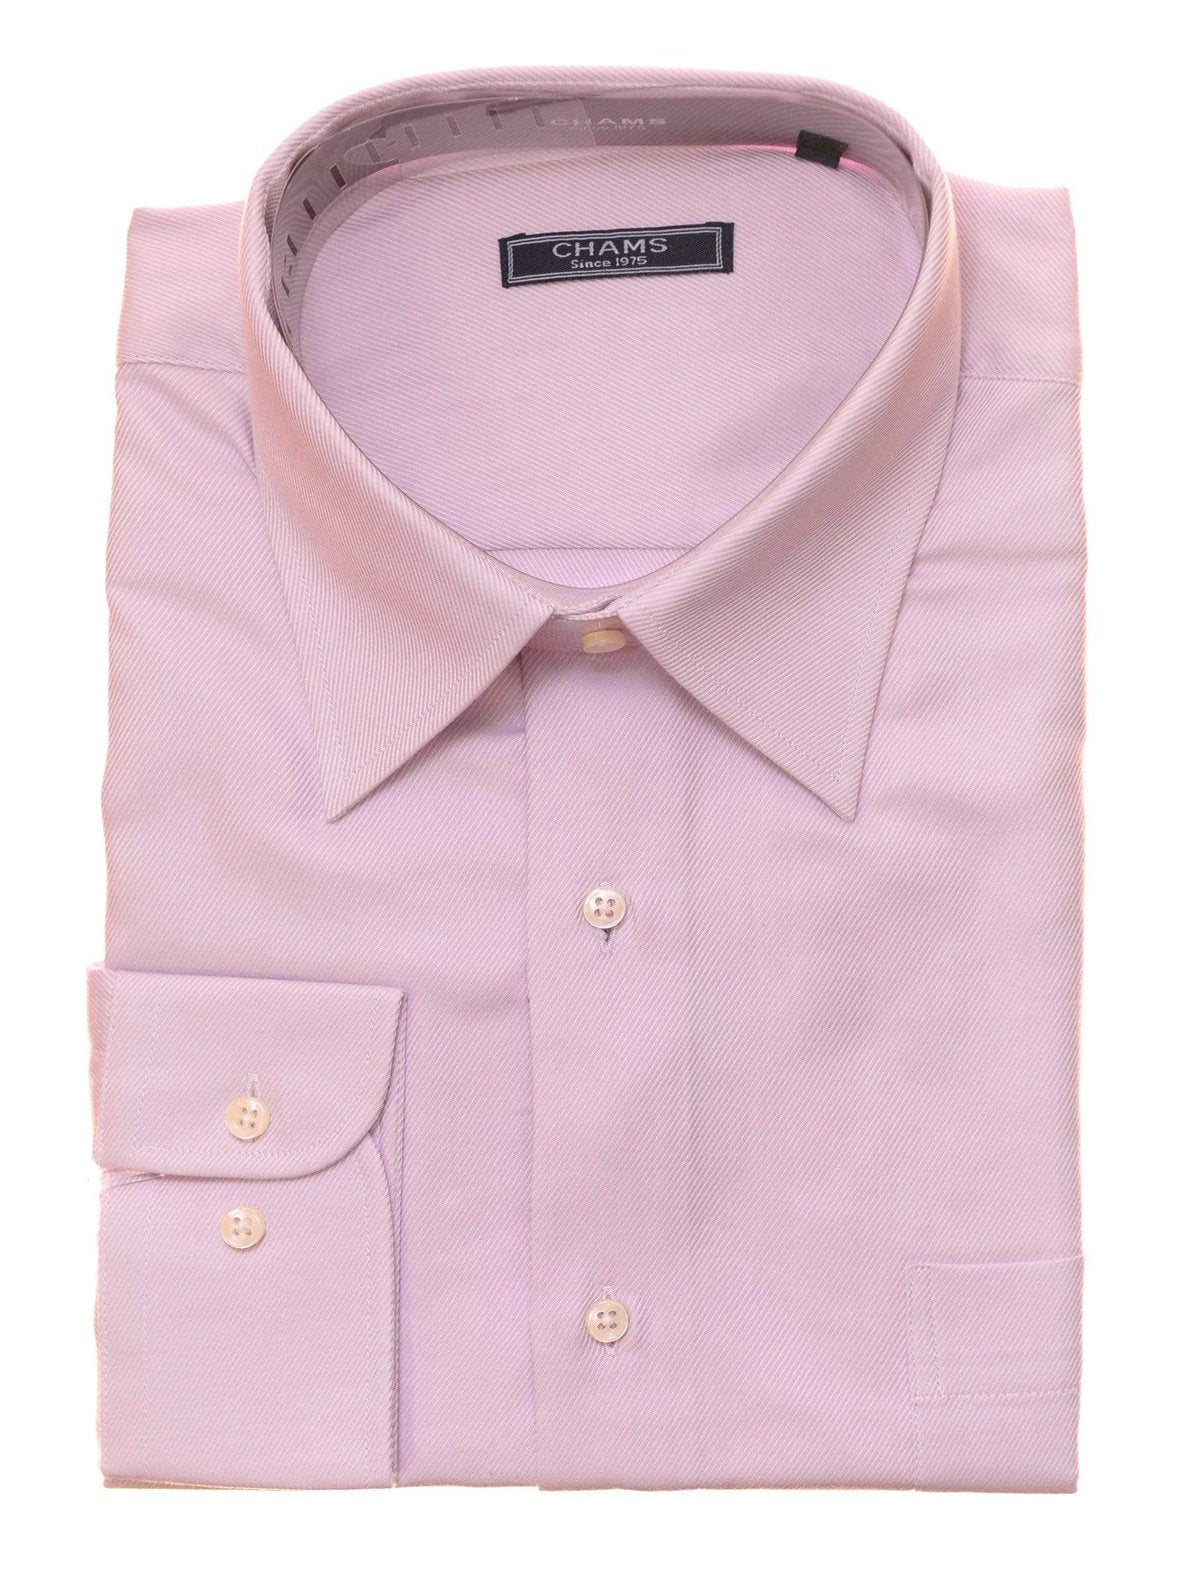 Chams SHIRTS 17 32/33 Chams Classic Fit Light Purple Twill Fine Combed Cotton Dress Shirt